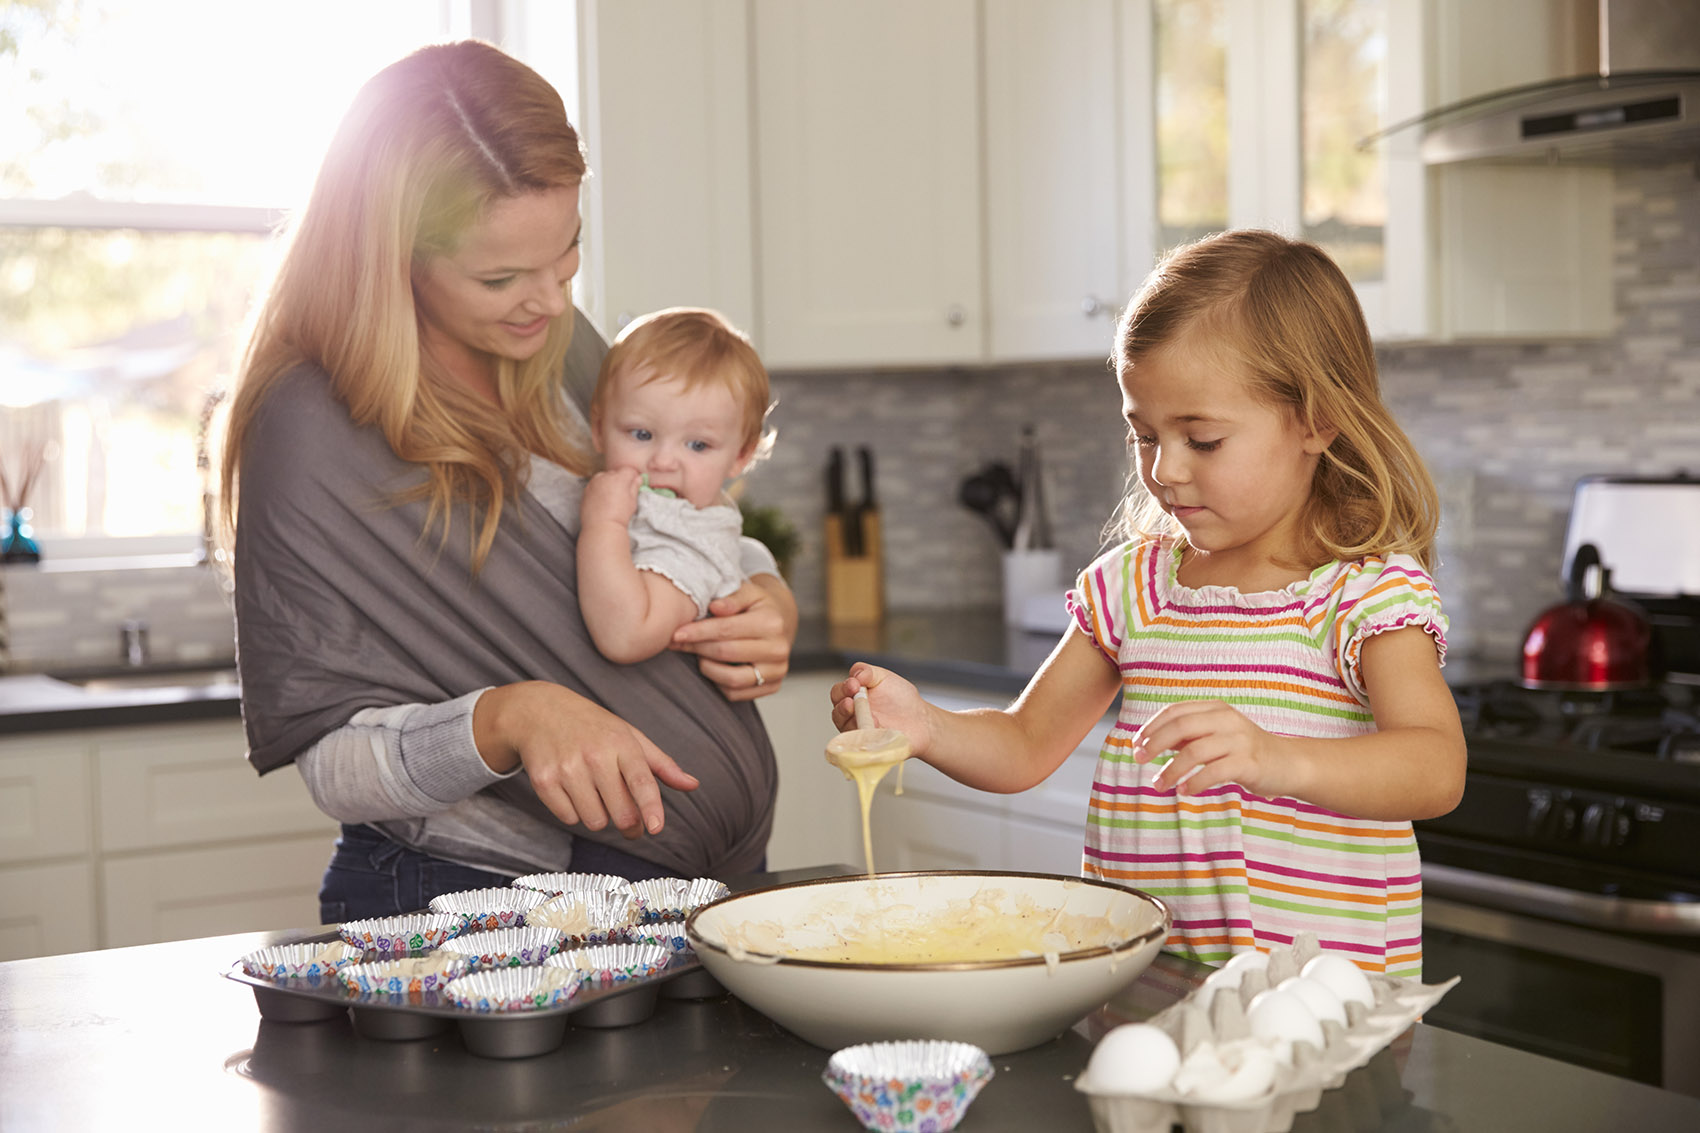 Young,girl,preparing,cake,mix,in,kitchen,,mum,showing,baby